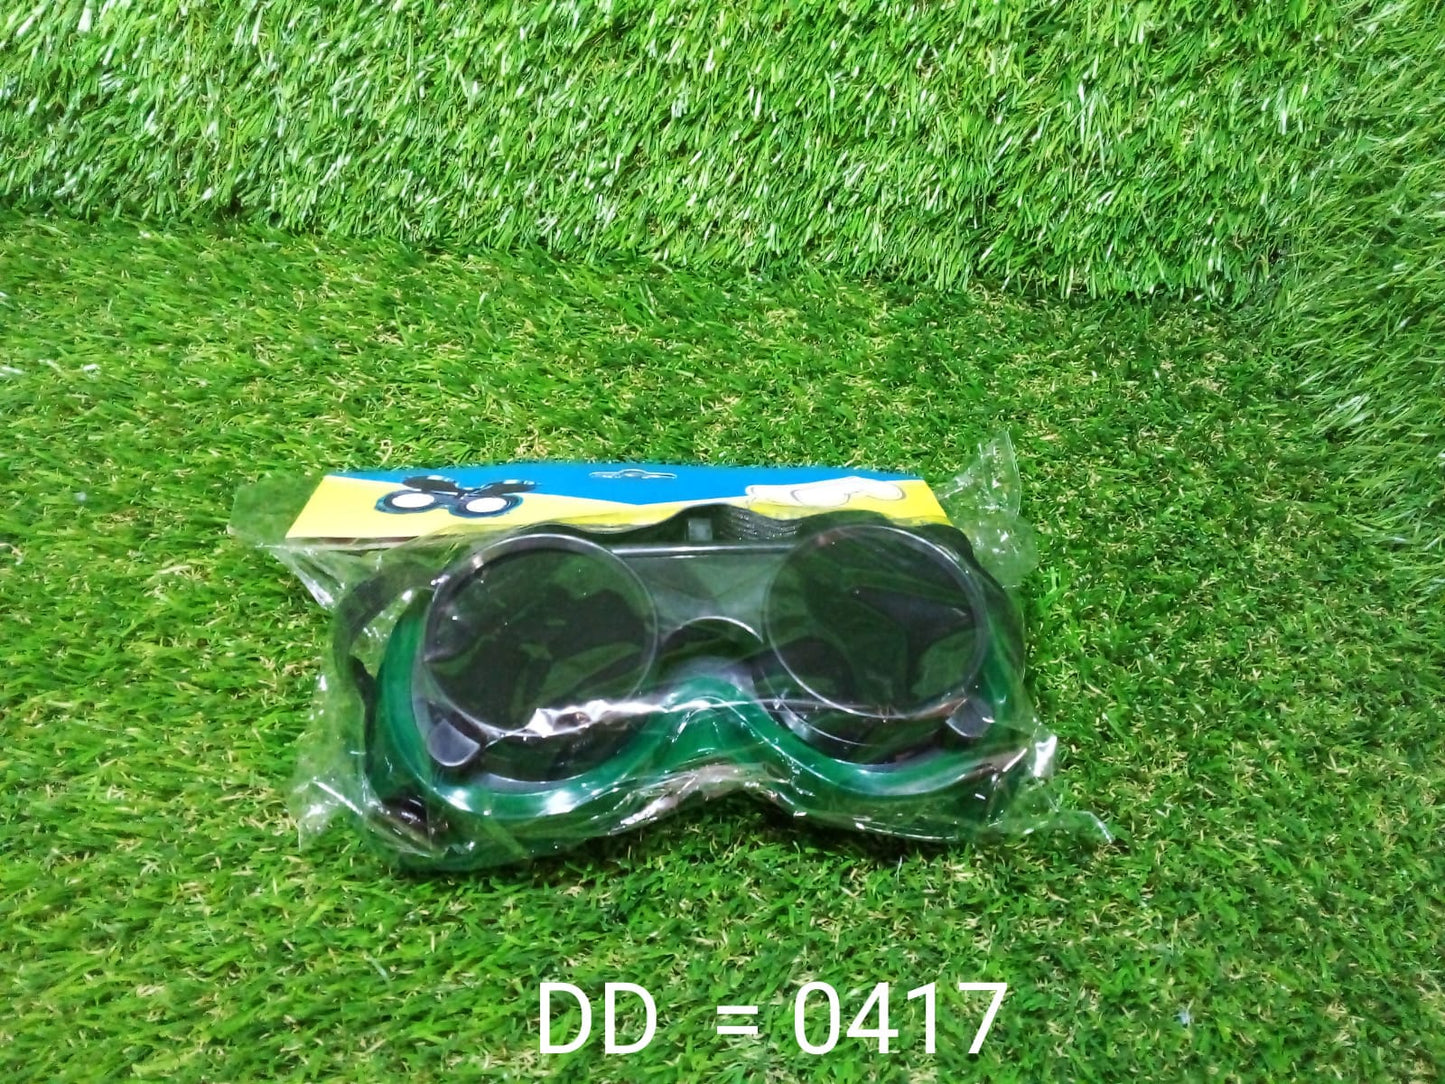 417 Welding Goggles (Dark Green, Large) Dukandaily